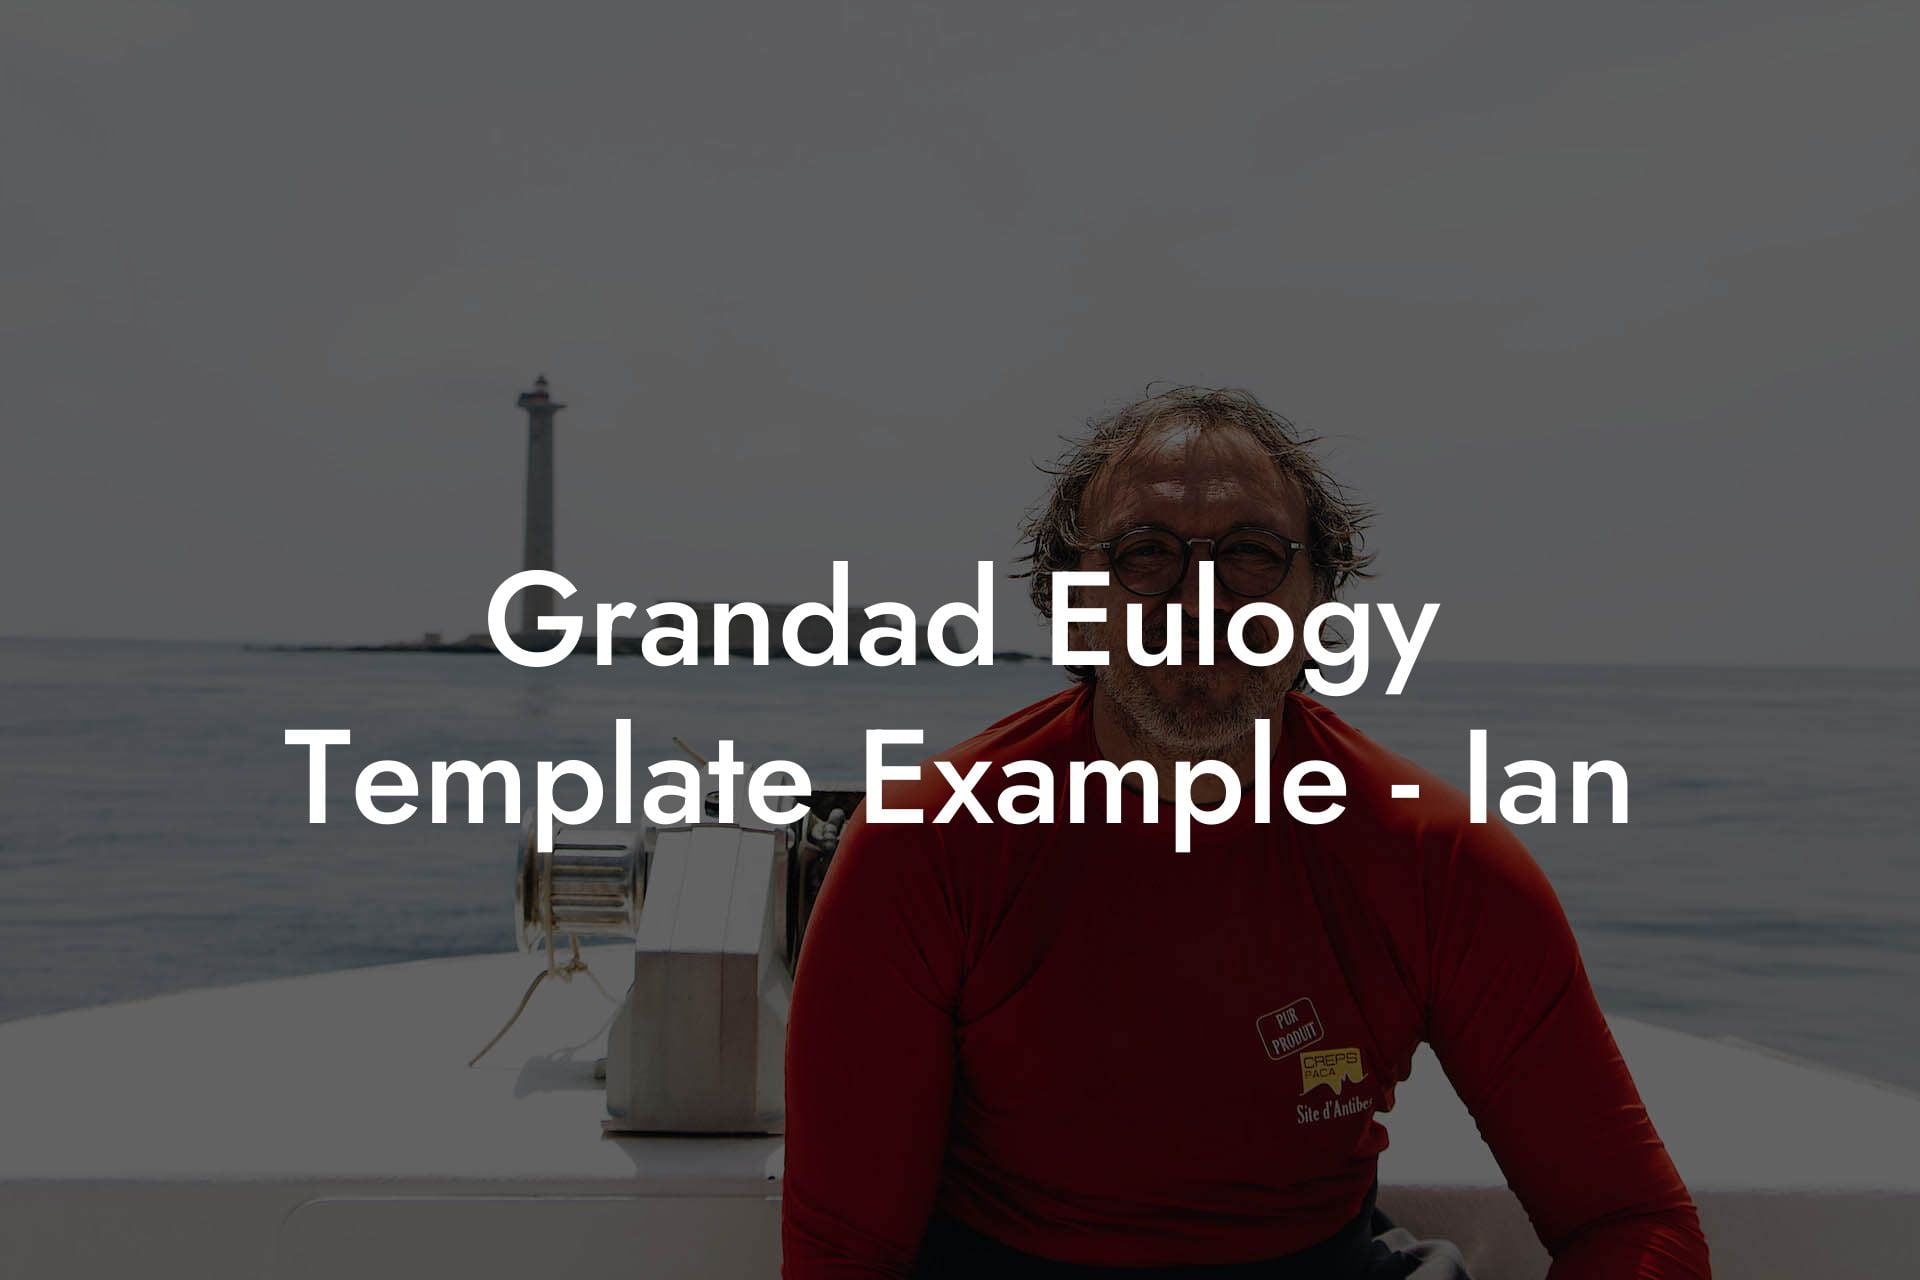 Grandad Eulogy Template Example - Ian